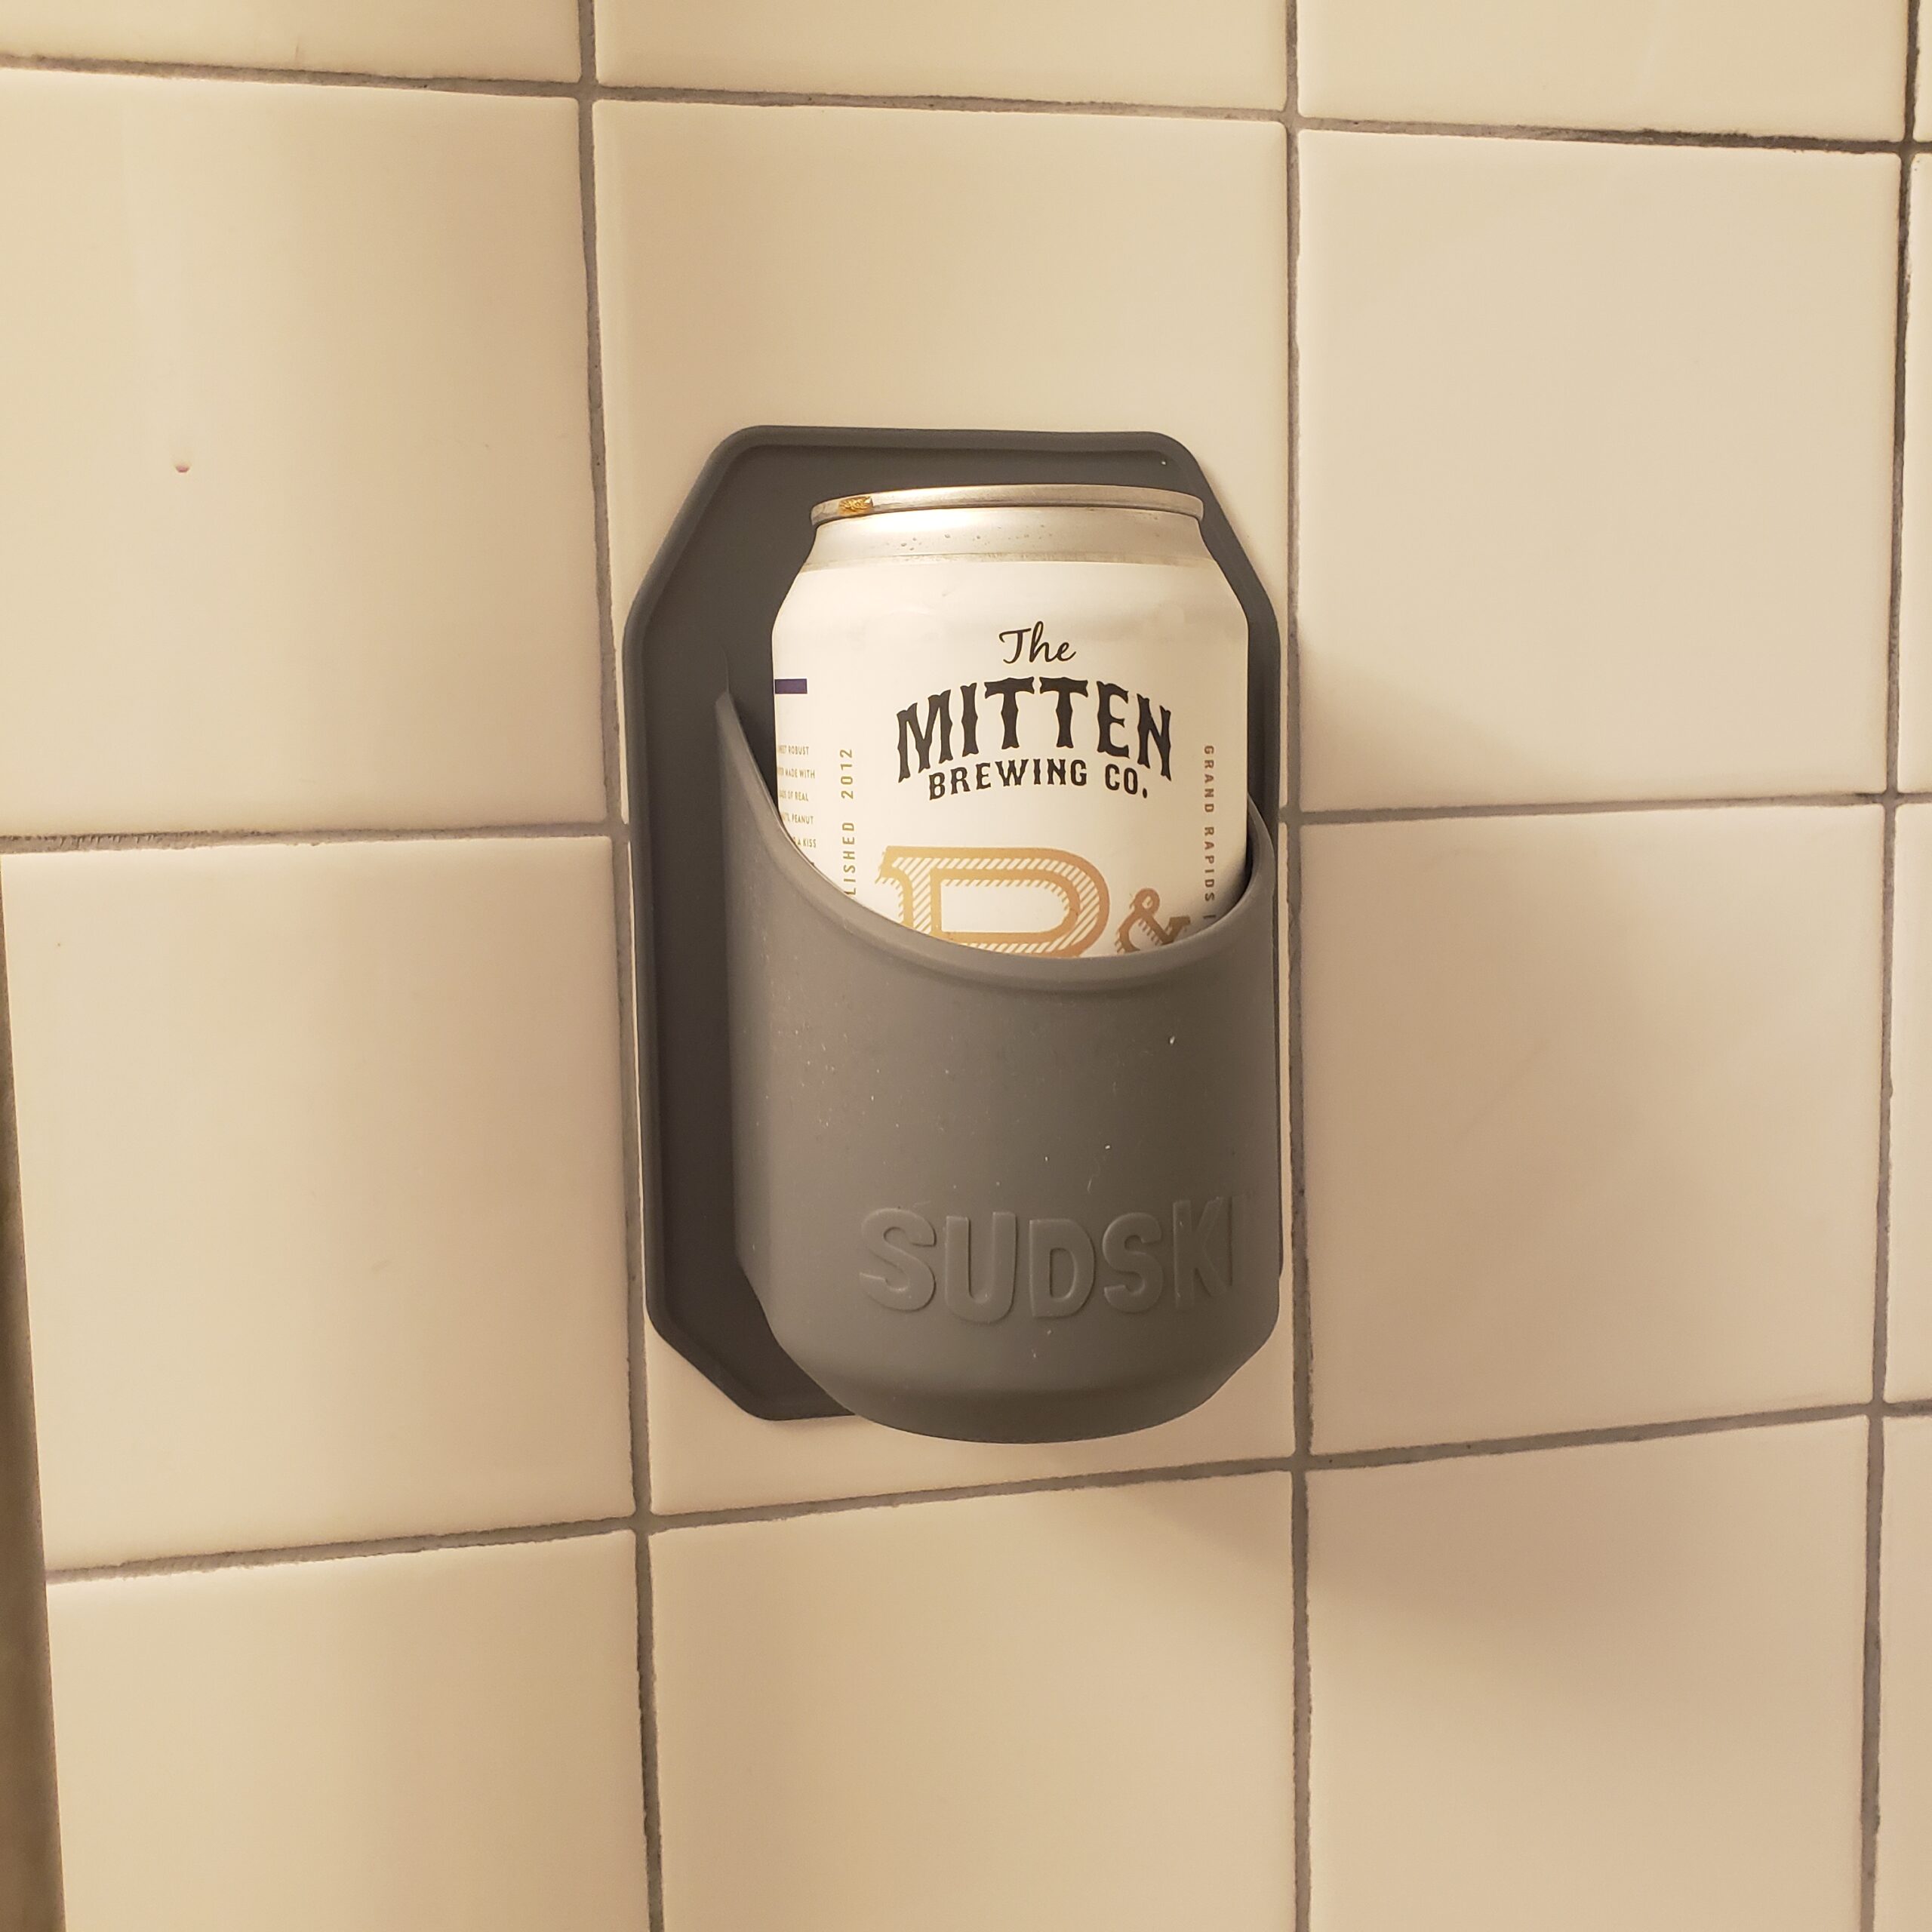 30 Watt SUDSKI Beer Can Holder Shower Caddy Silicone 1 pk - Total